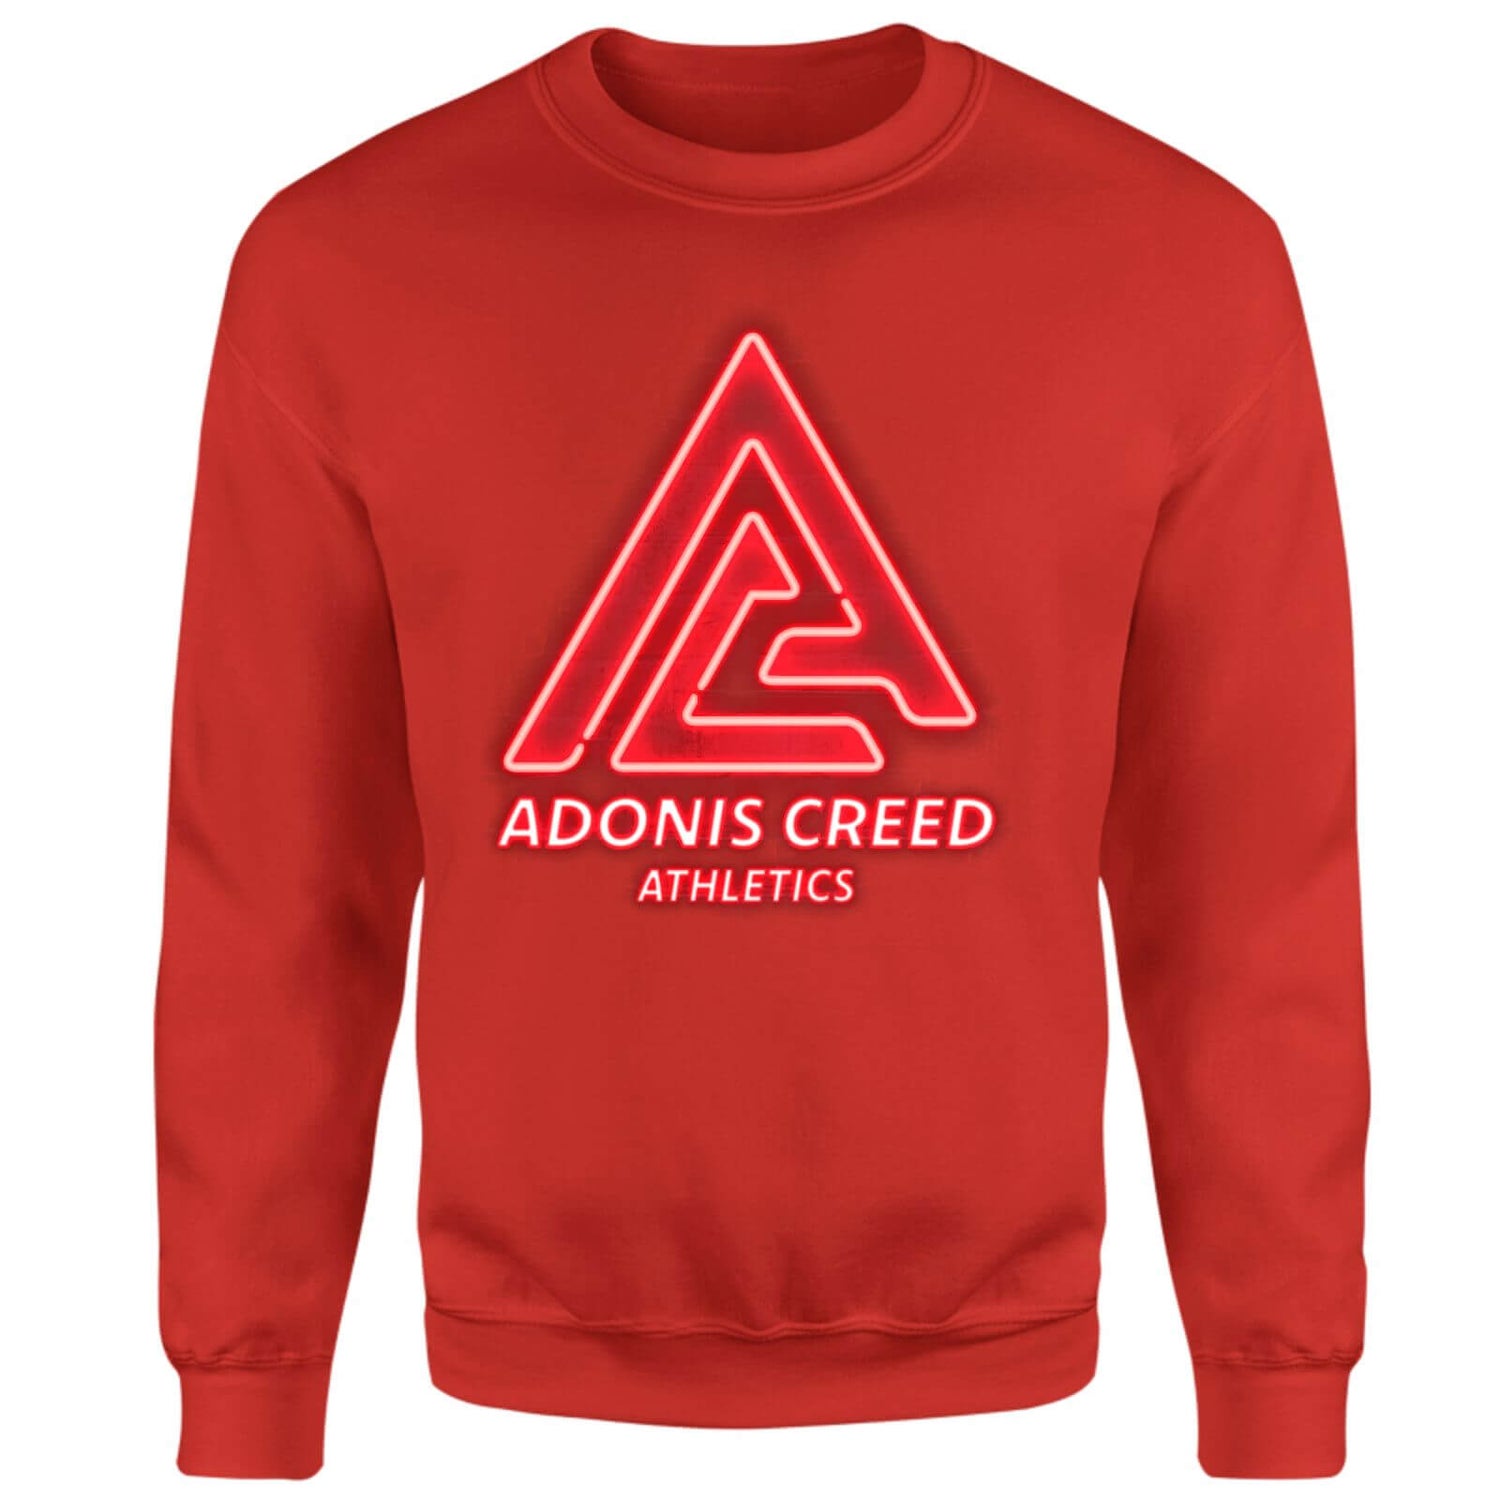 Creed Adonis Creed Athletics Neon Sign Sweatshirt - Red - XS